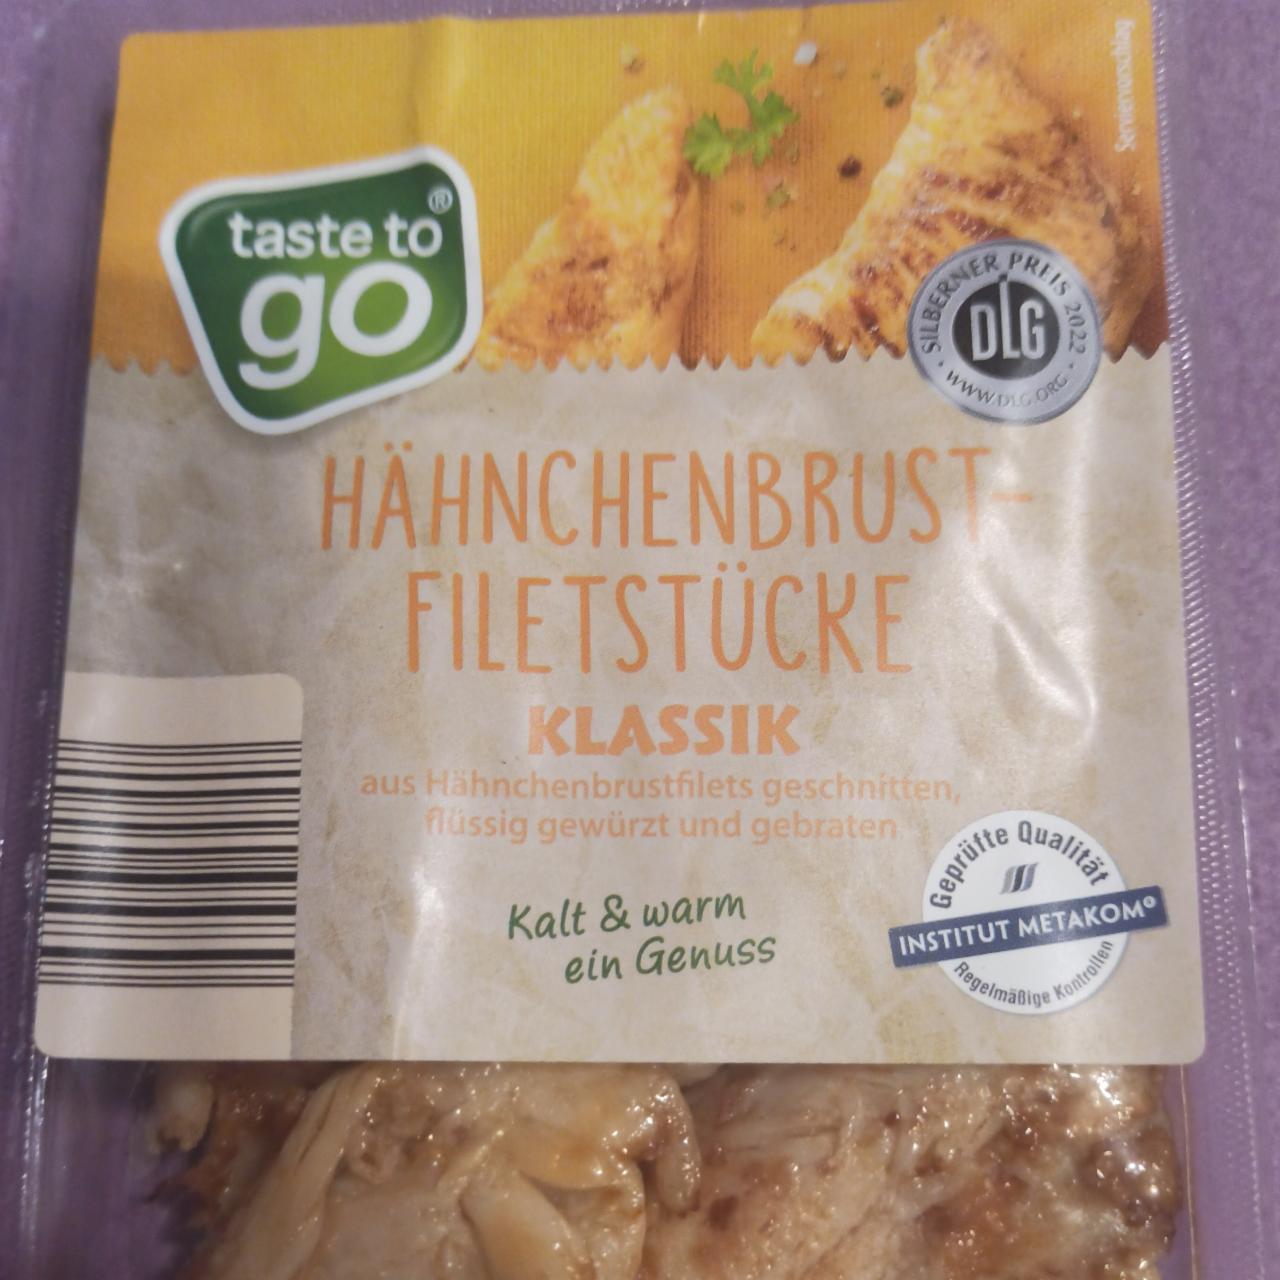 Fotografie - Hahnchenbrust filetstucke klassik Taste to go